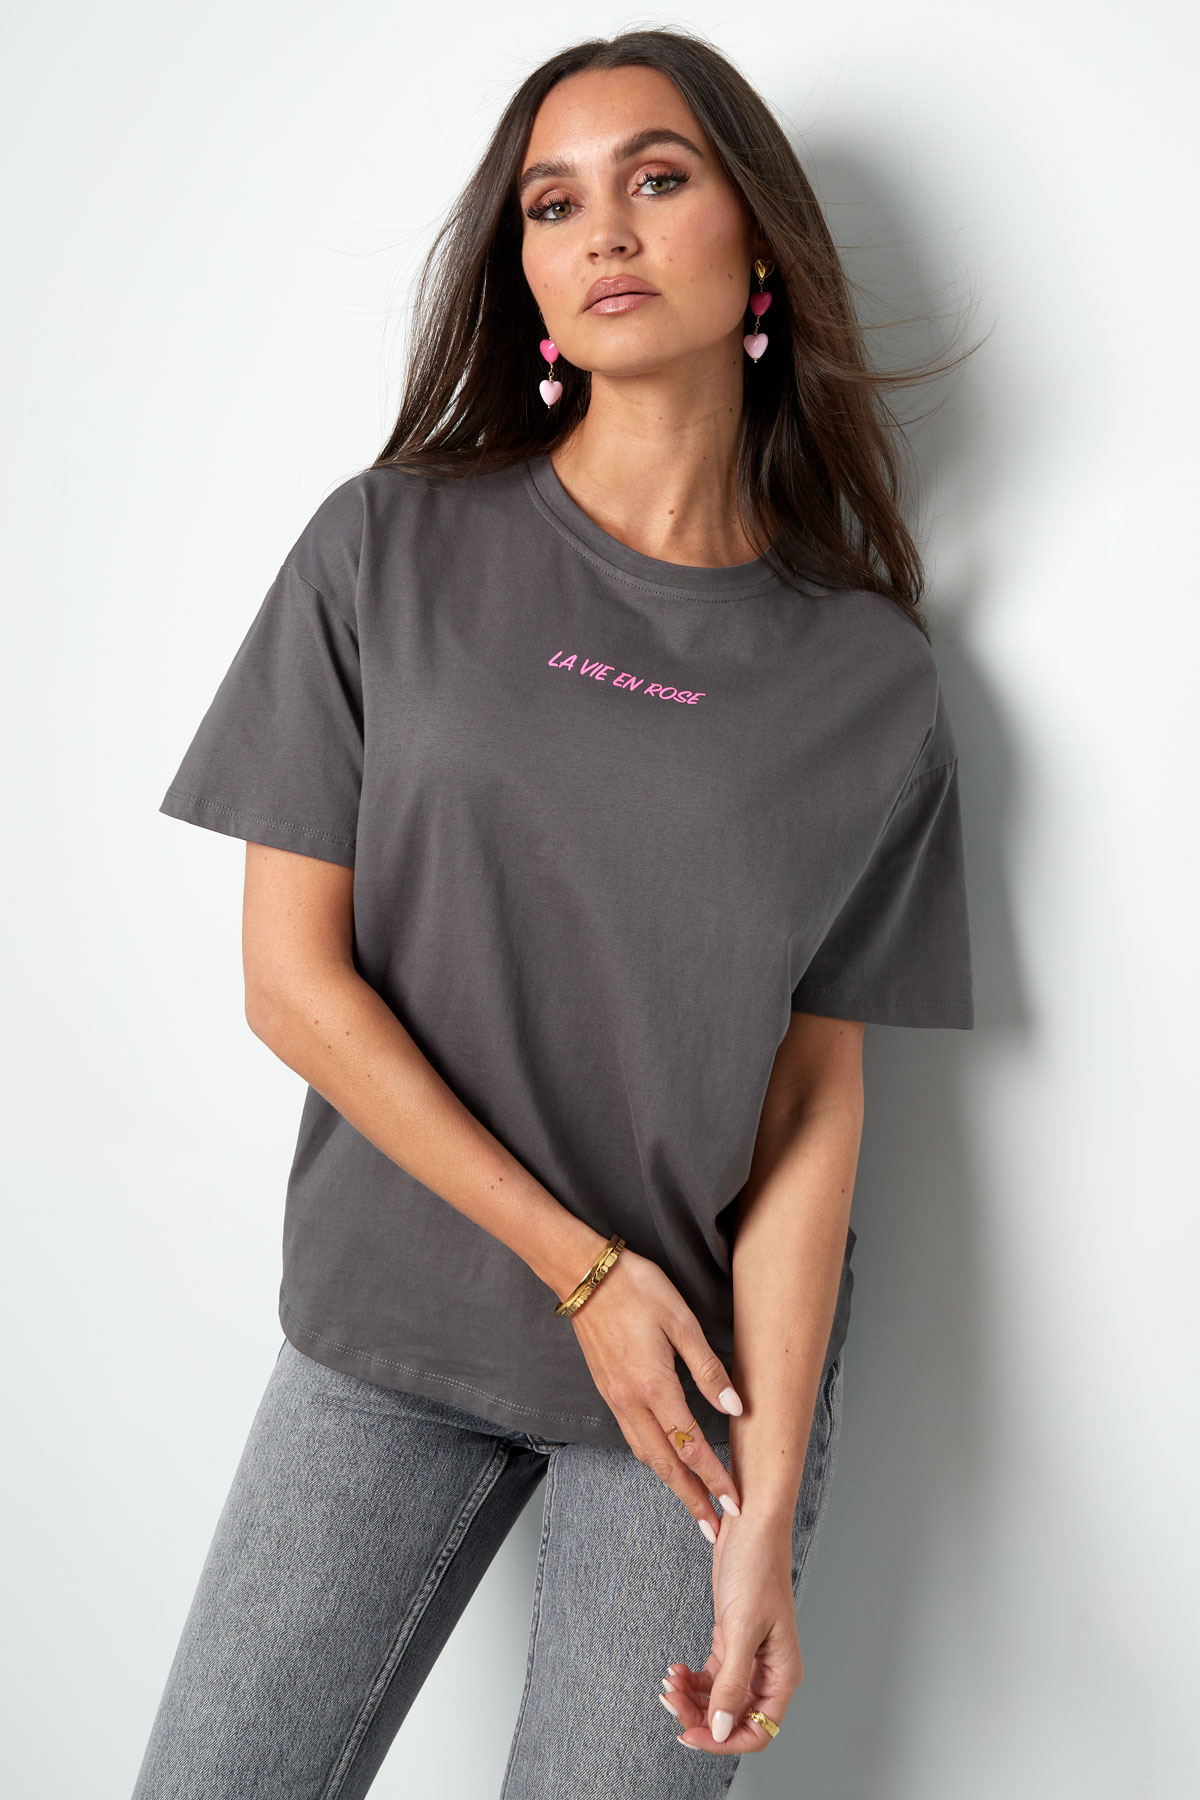 T-shirt la vie en rose - grigio scuro Immagine2